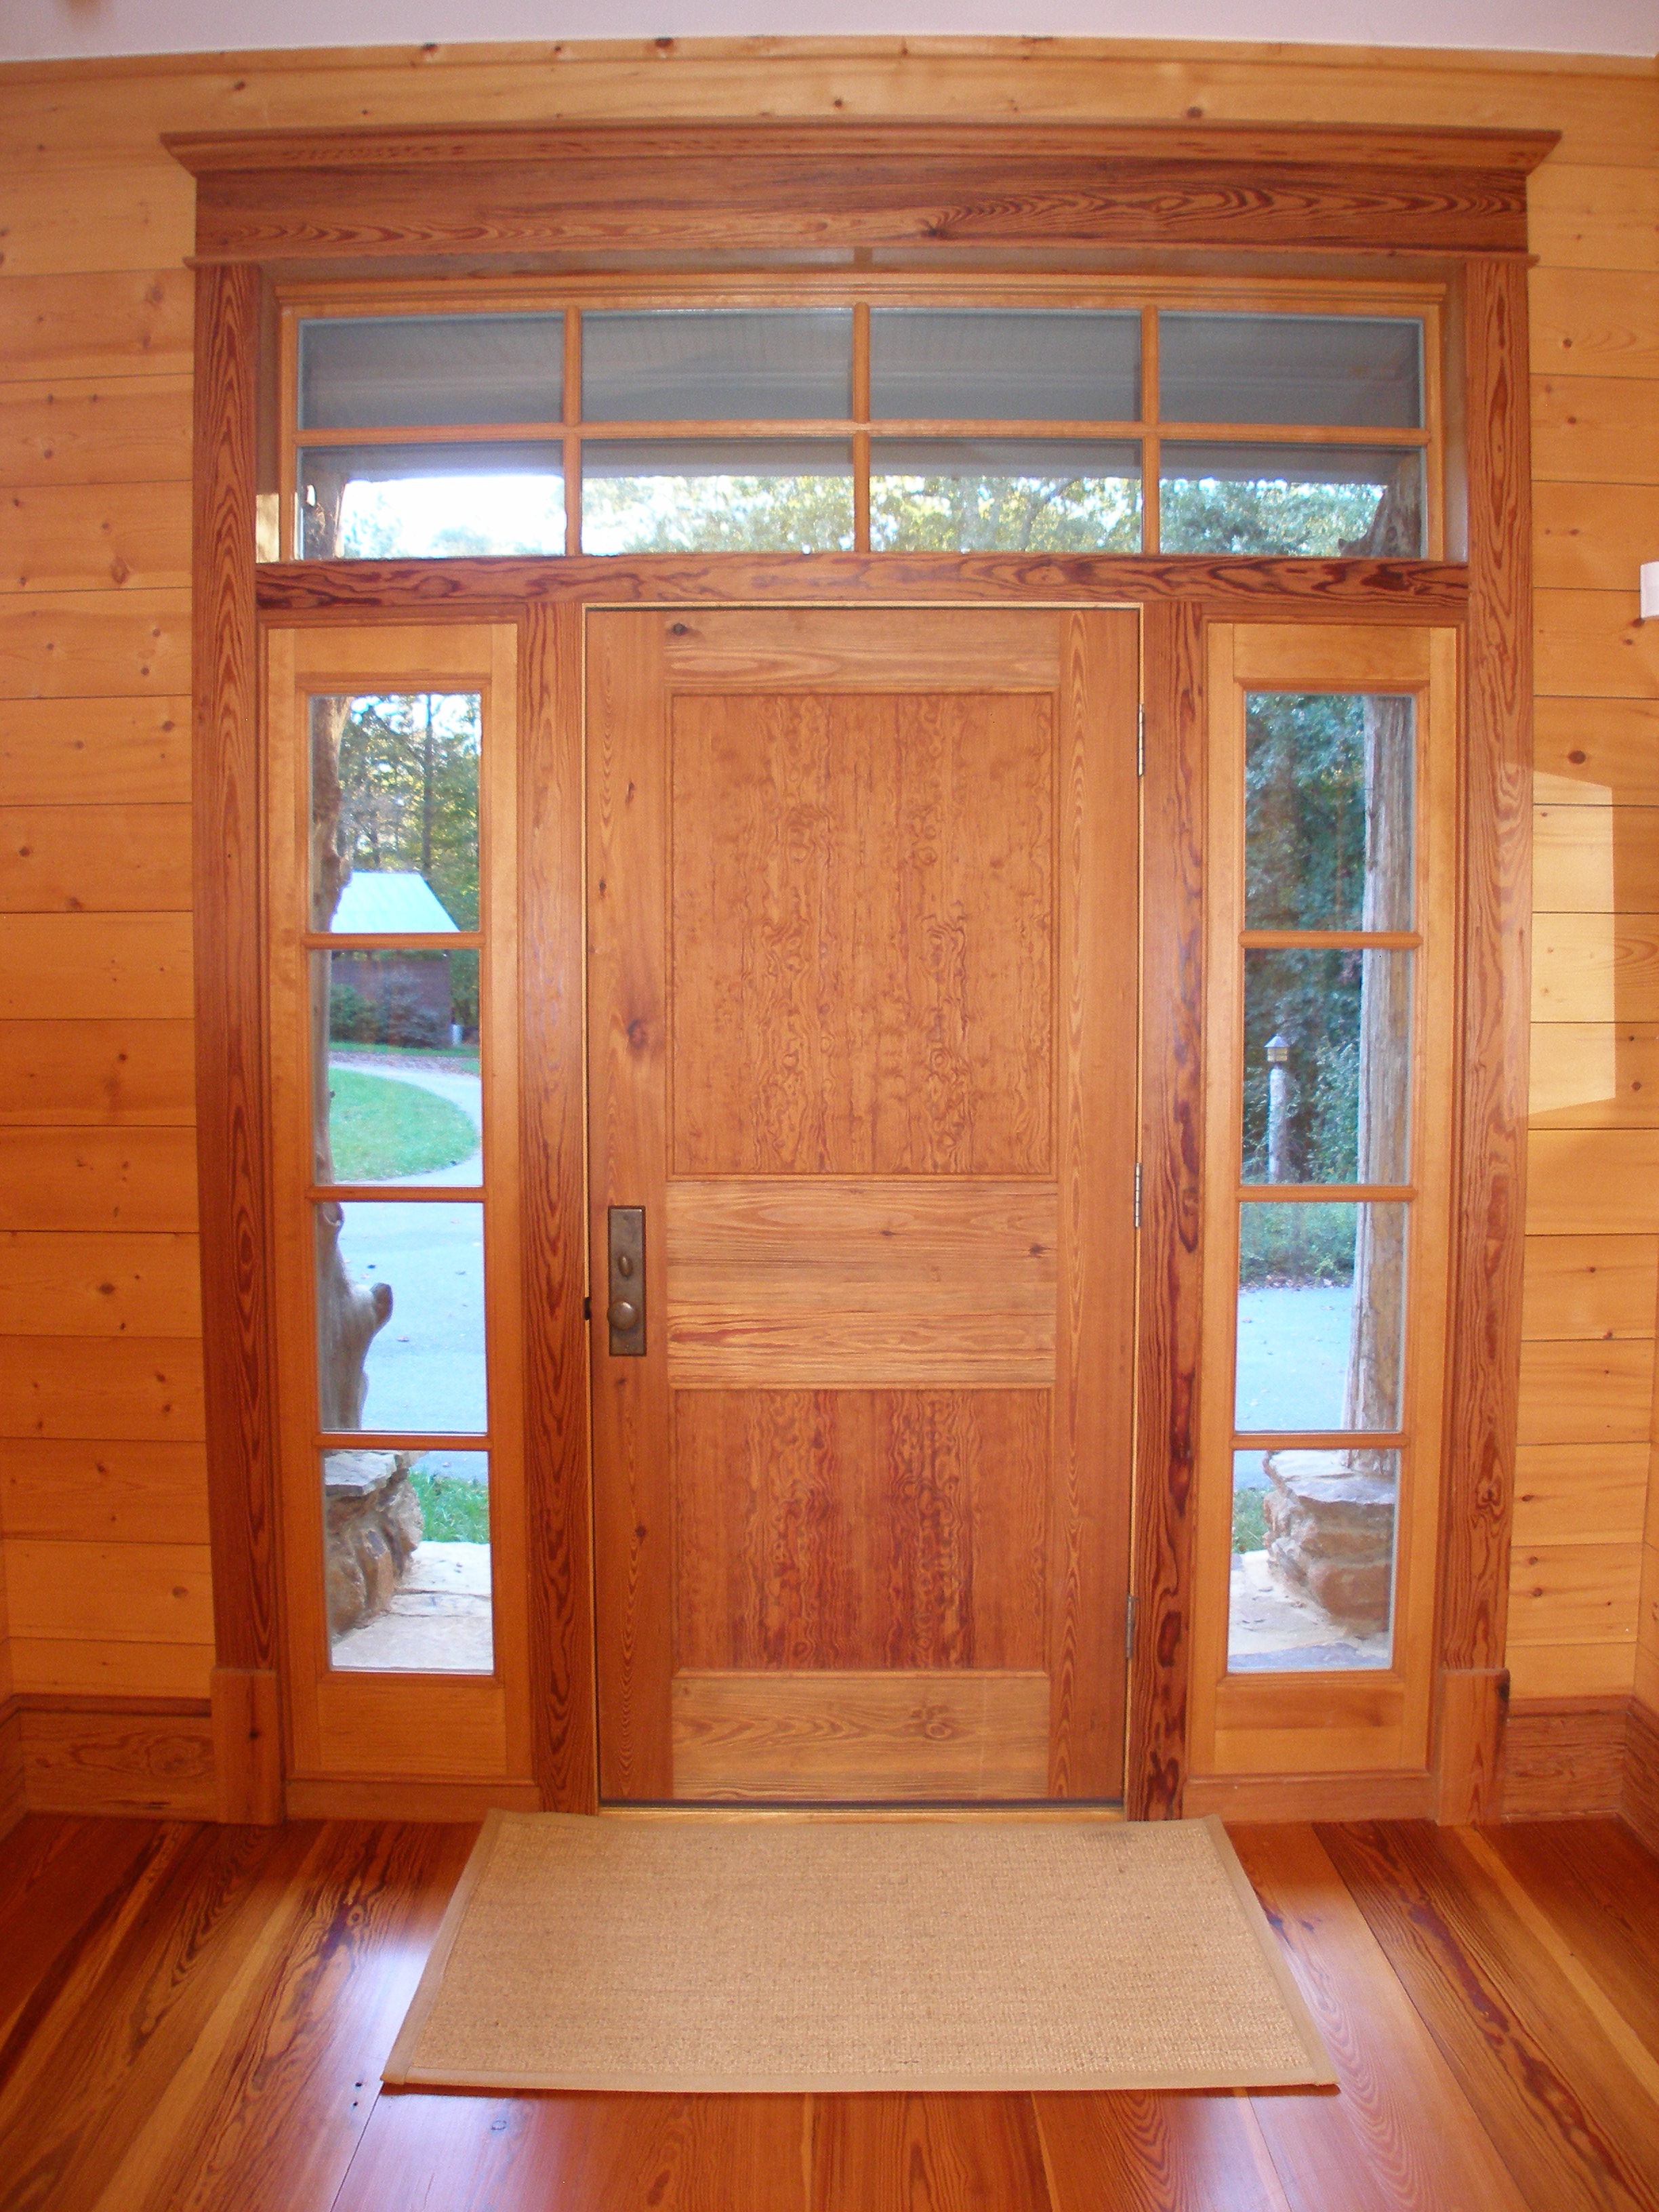 Inside of entrance door shows interior panel arrangement of curly pine panels.